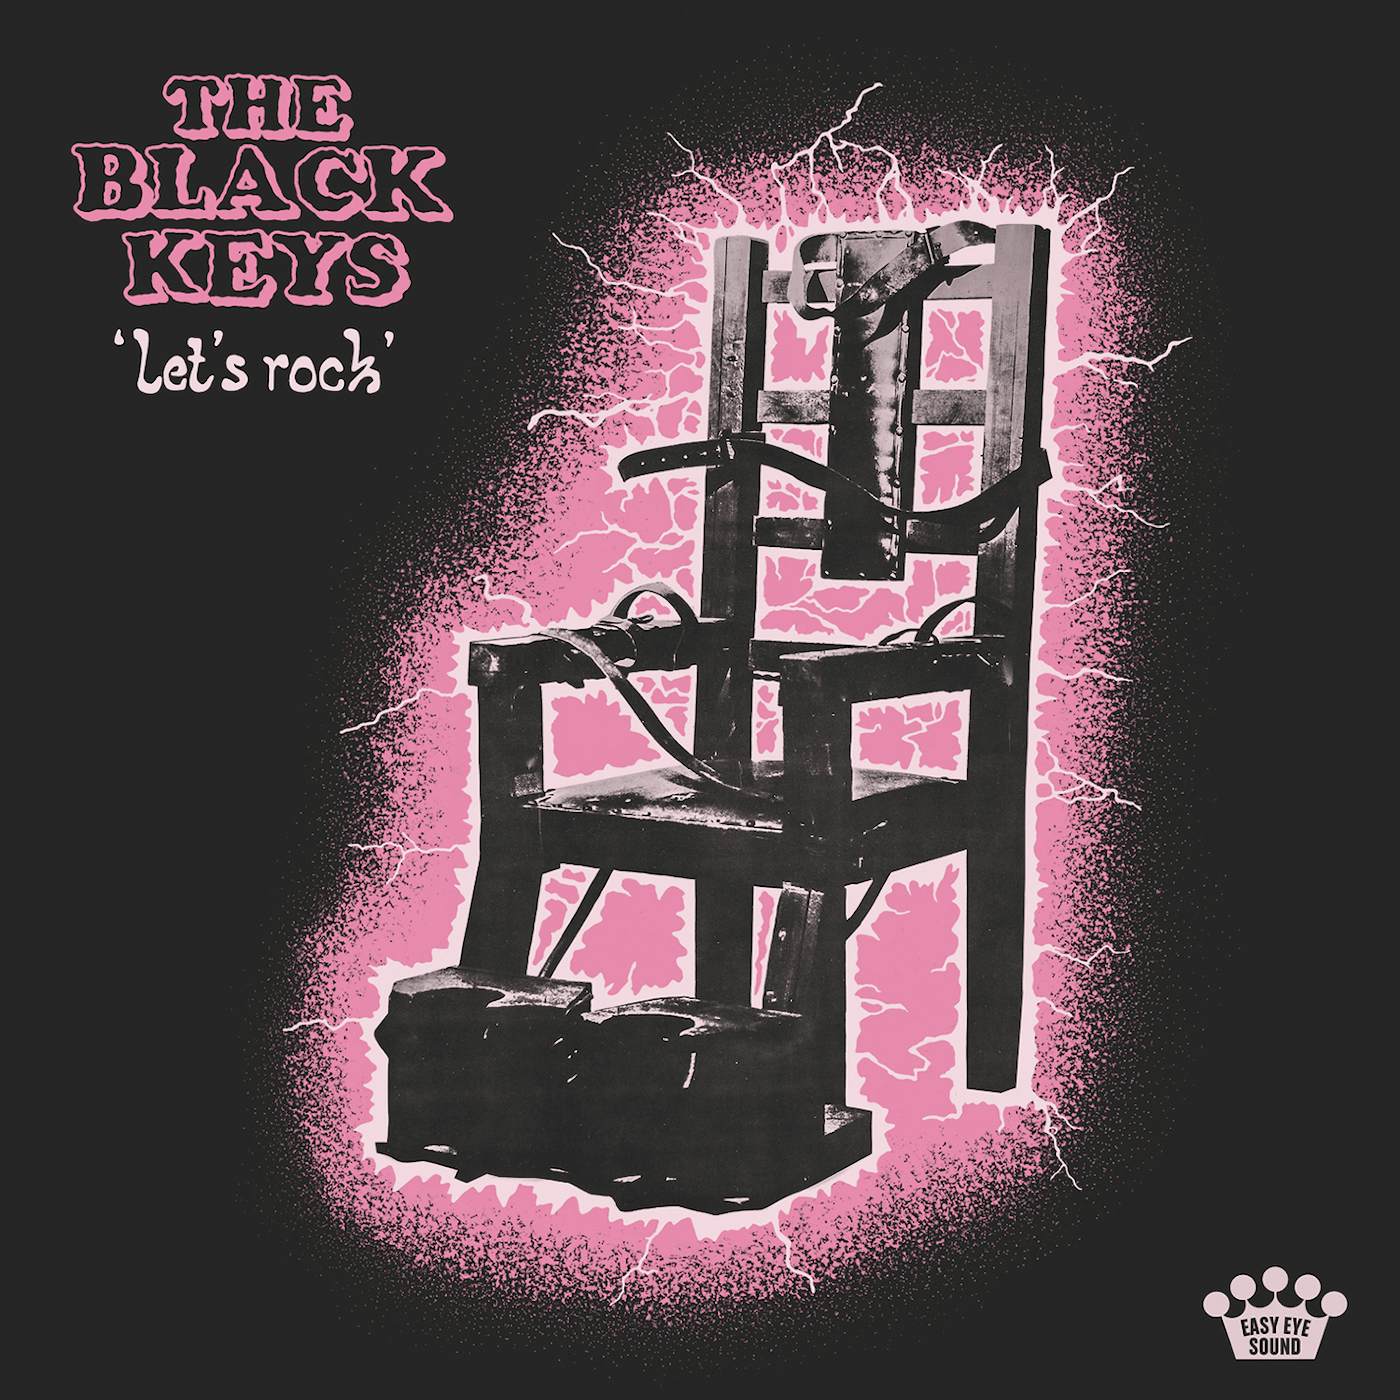 The Black Keys Let's Rock Vinyl Record